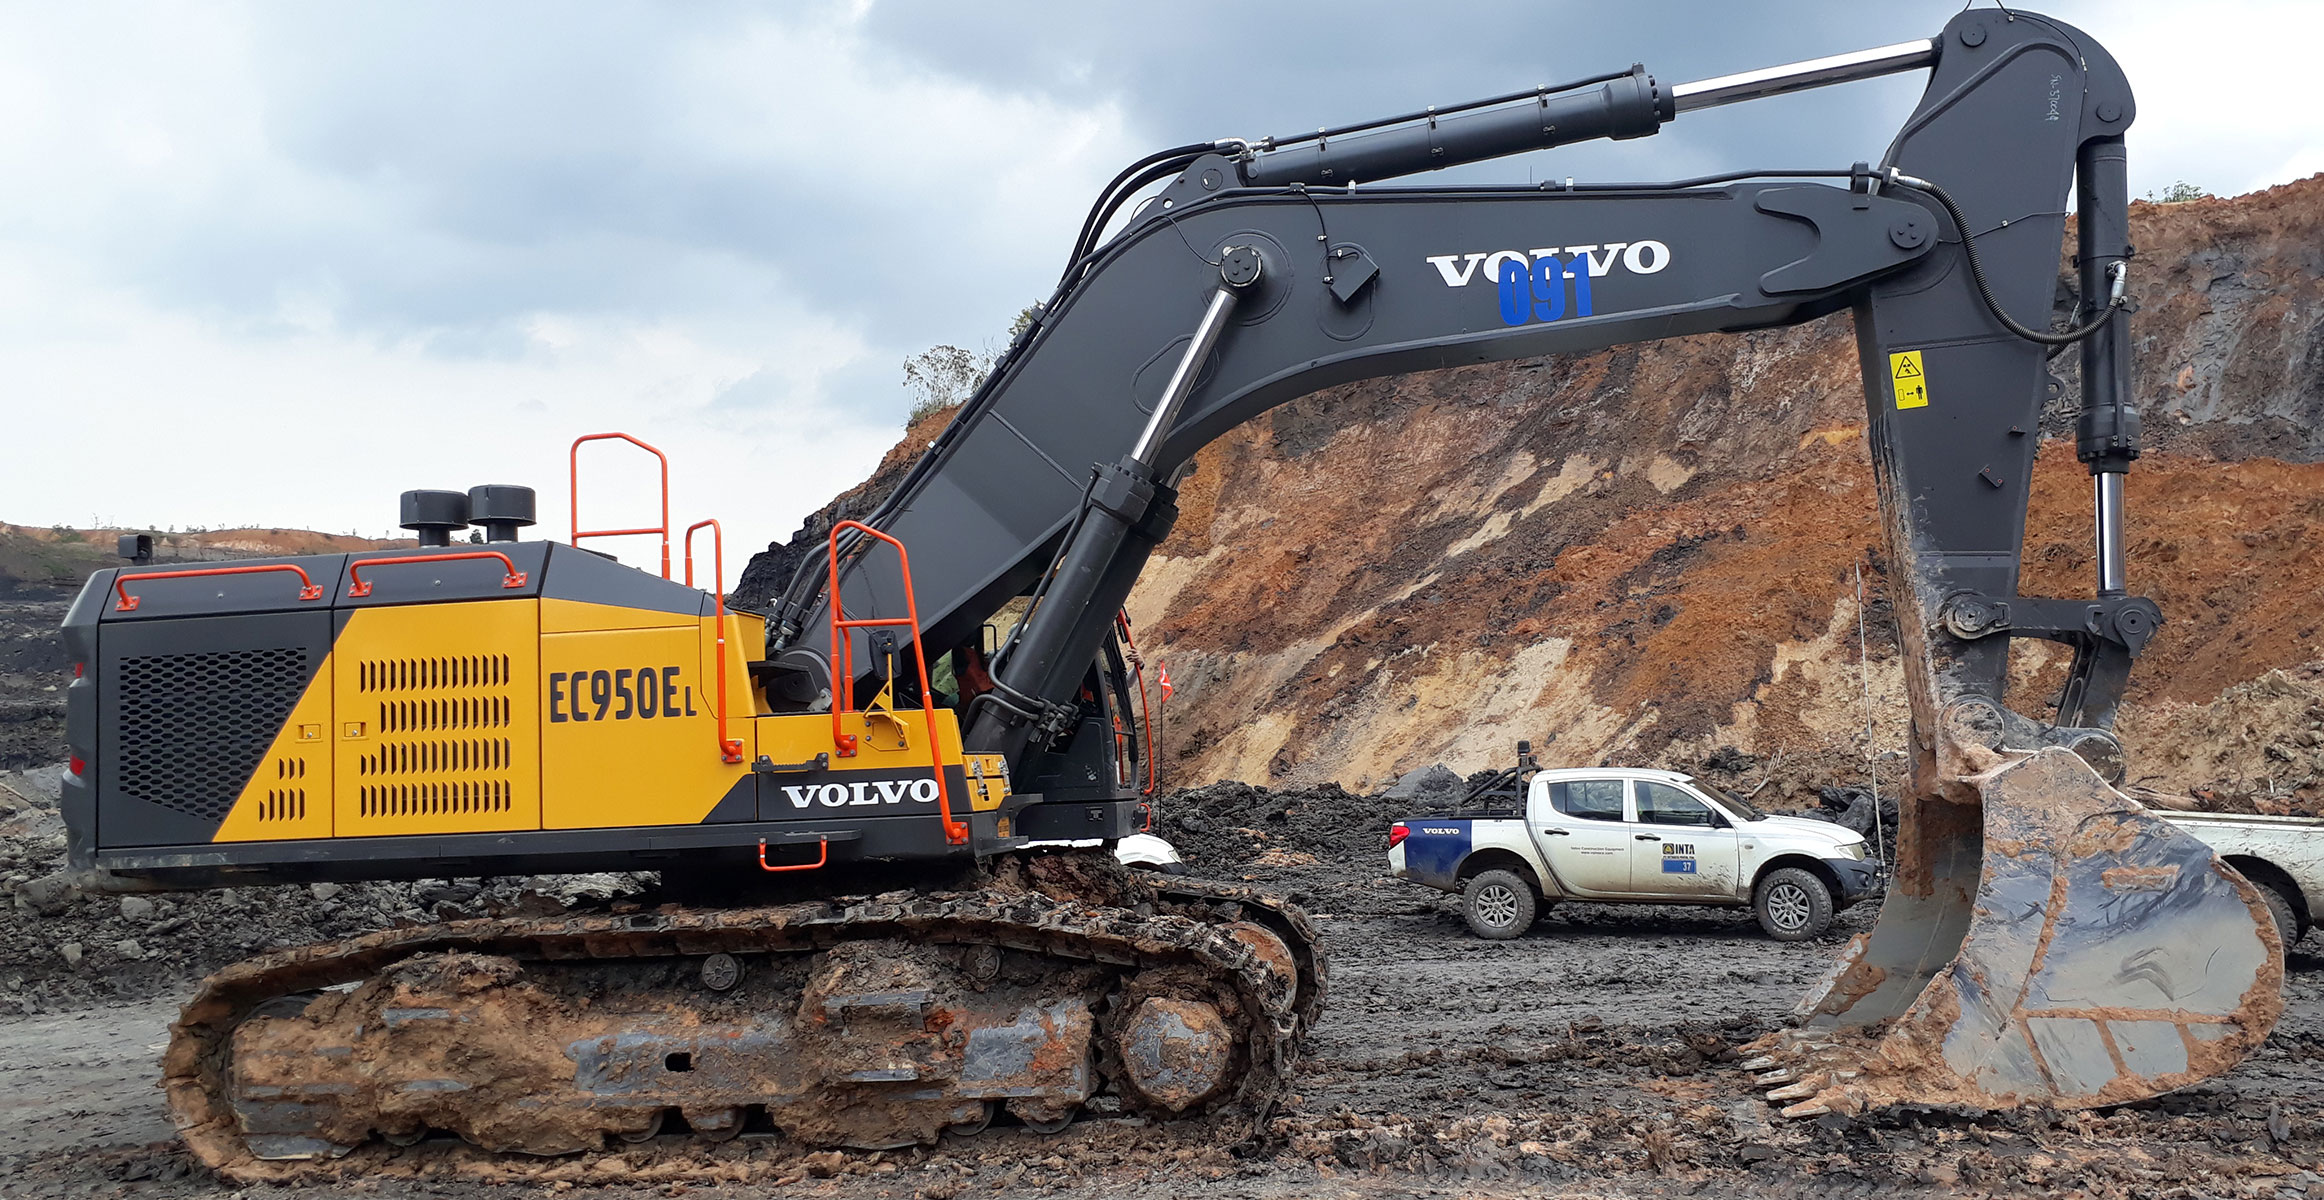  Volvo  EC950E outperform larger excavators in Indonesian  